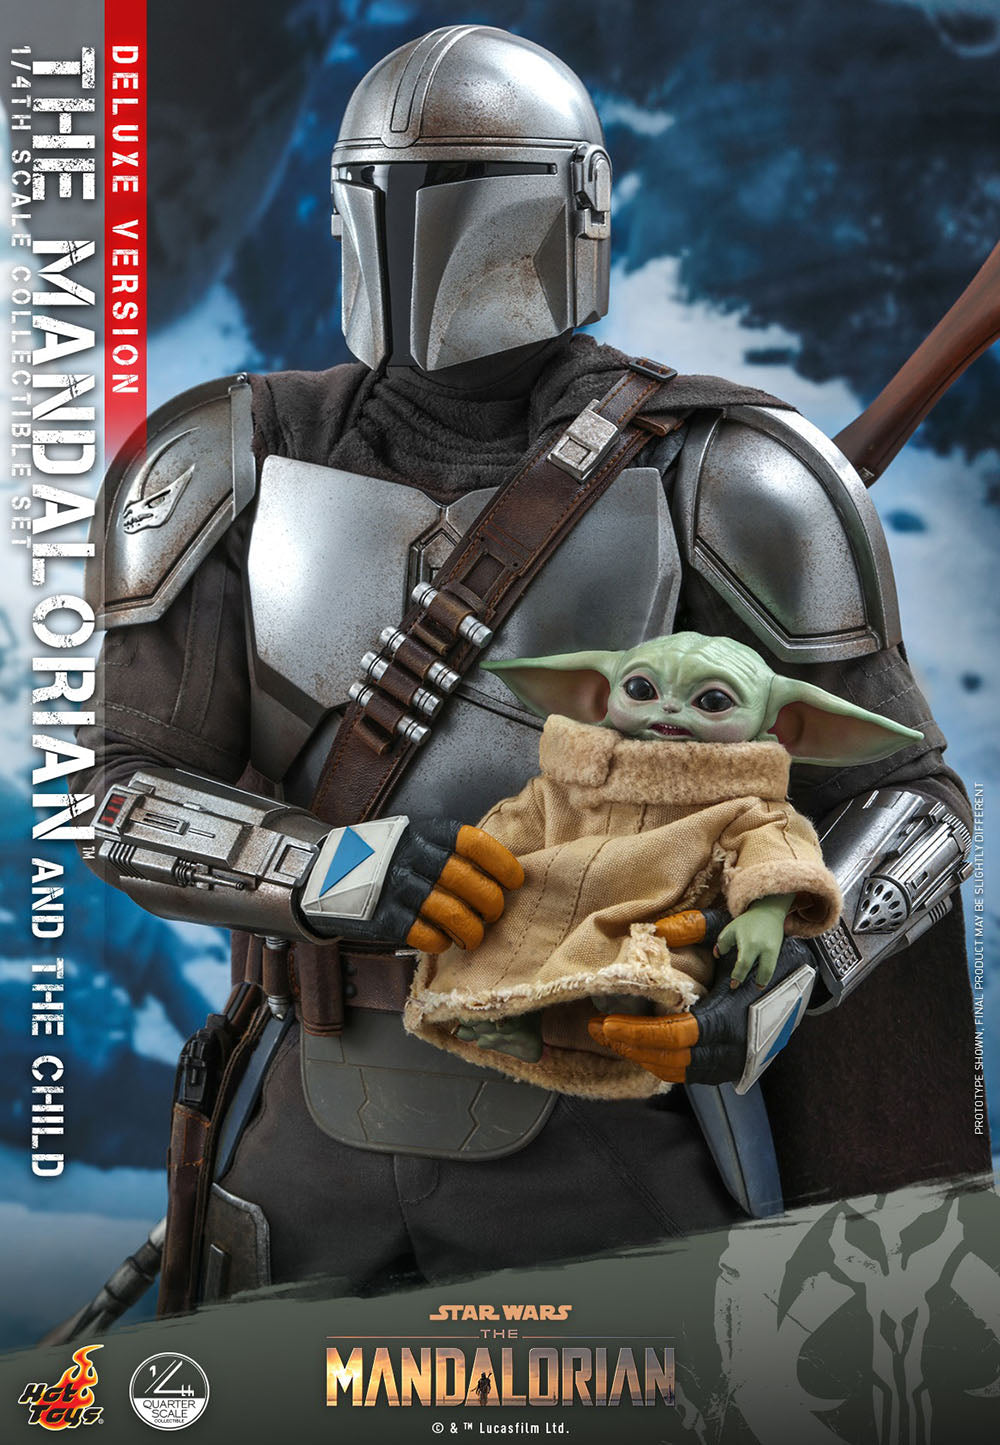 Star Wars: The Mandalorian Season 2 Action Figure set 18" Exclusive collection